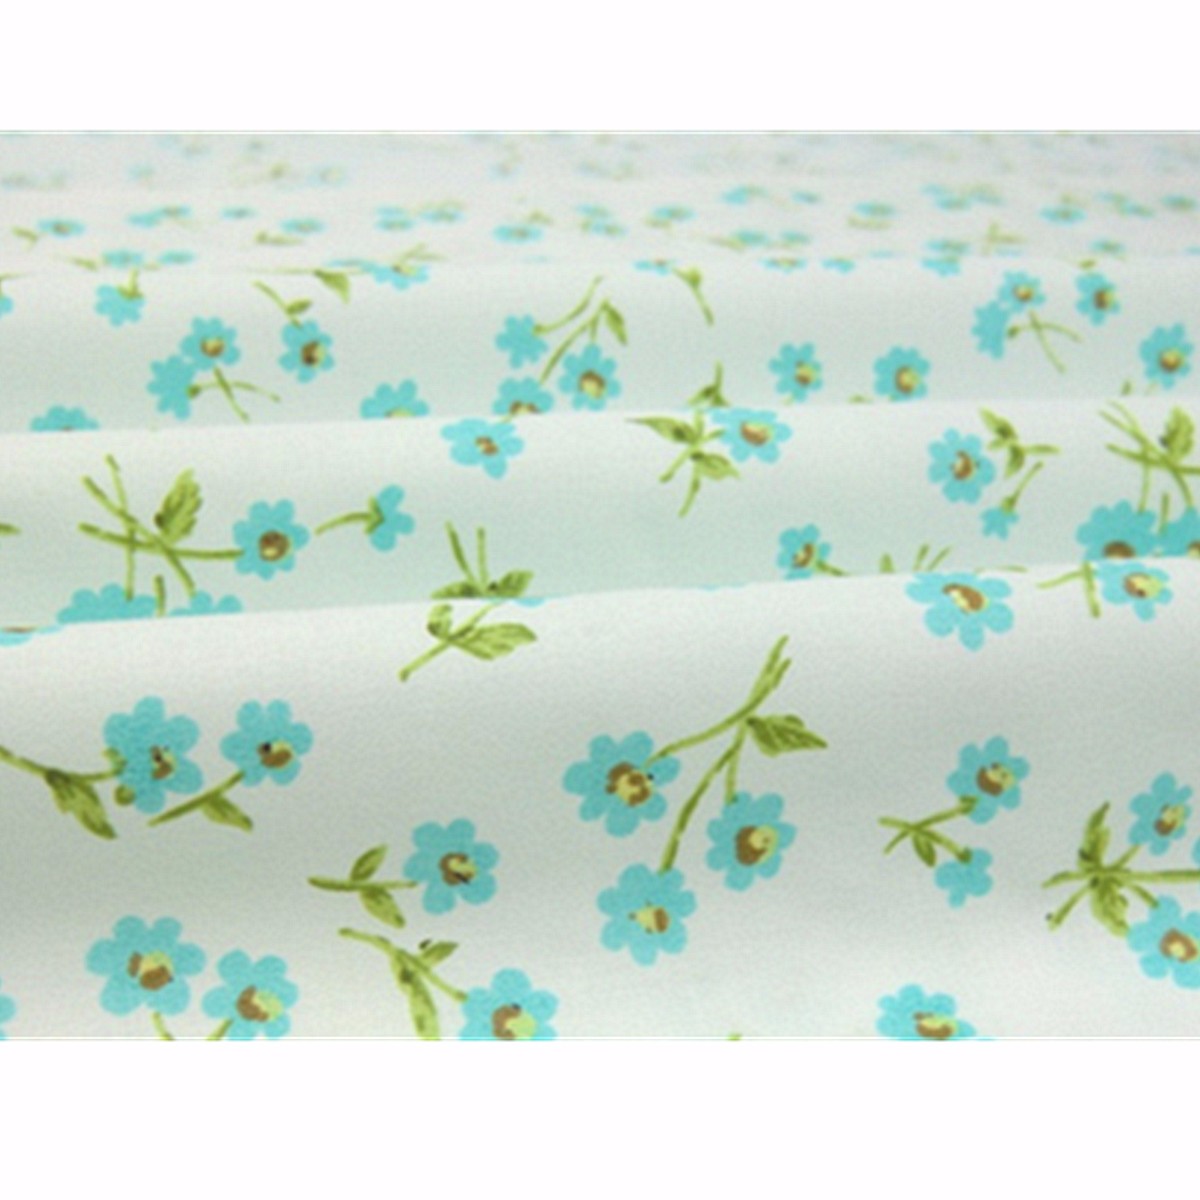 9Pcs-DIY-Bundles-Fabric-Fat-Quarters-Cotton-Florals-Gingham-Craft-Quilt-Sewing-1719877